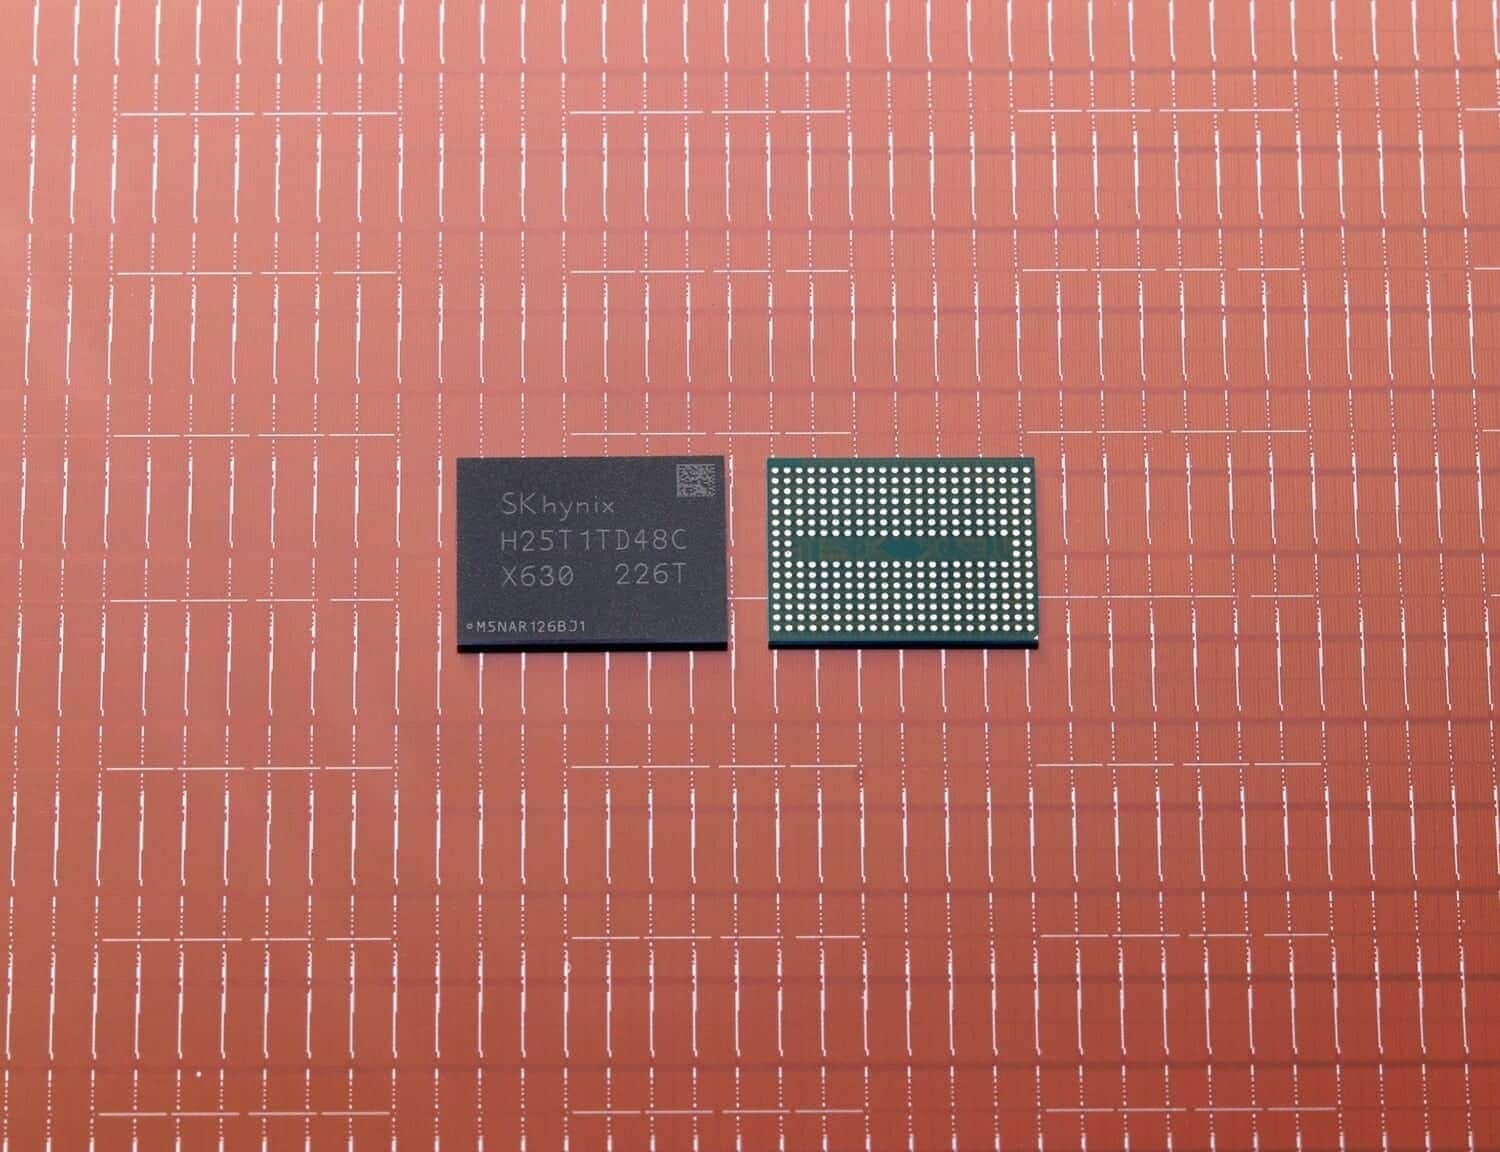 SK hynixの300層3D NANDがSSDの性能向上とコスト低減を実現する